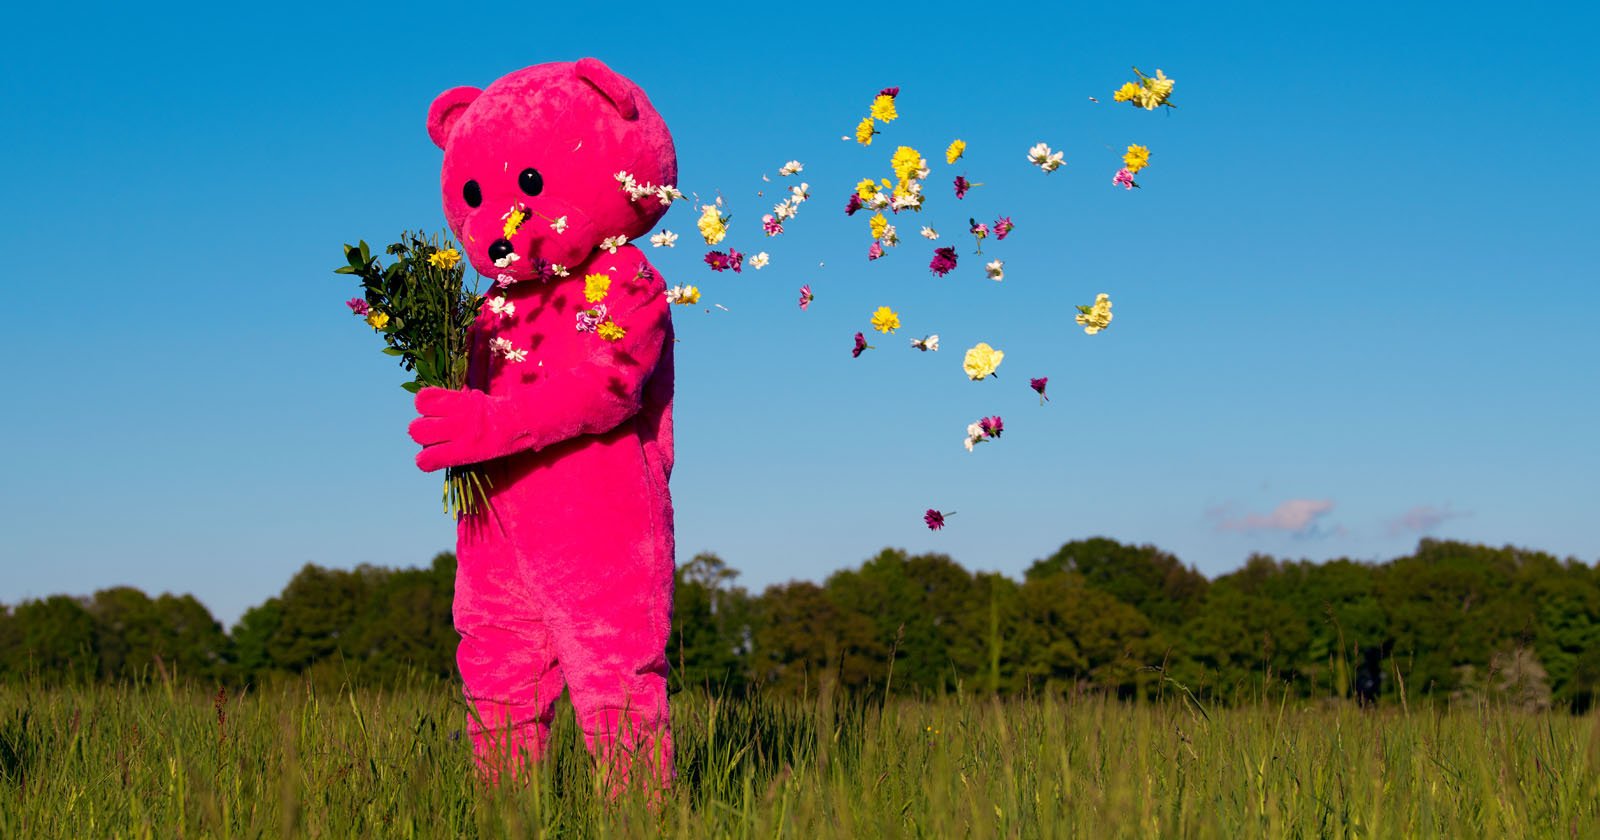 How Artist LUAP Healed Through His The Pink Bear Photos